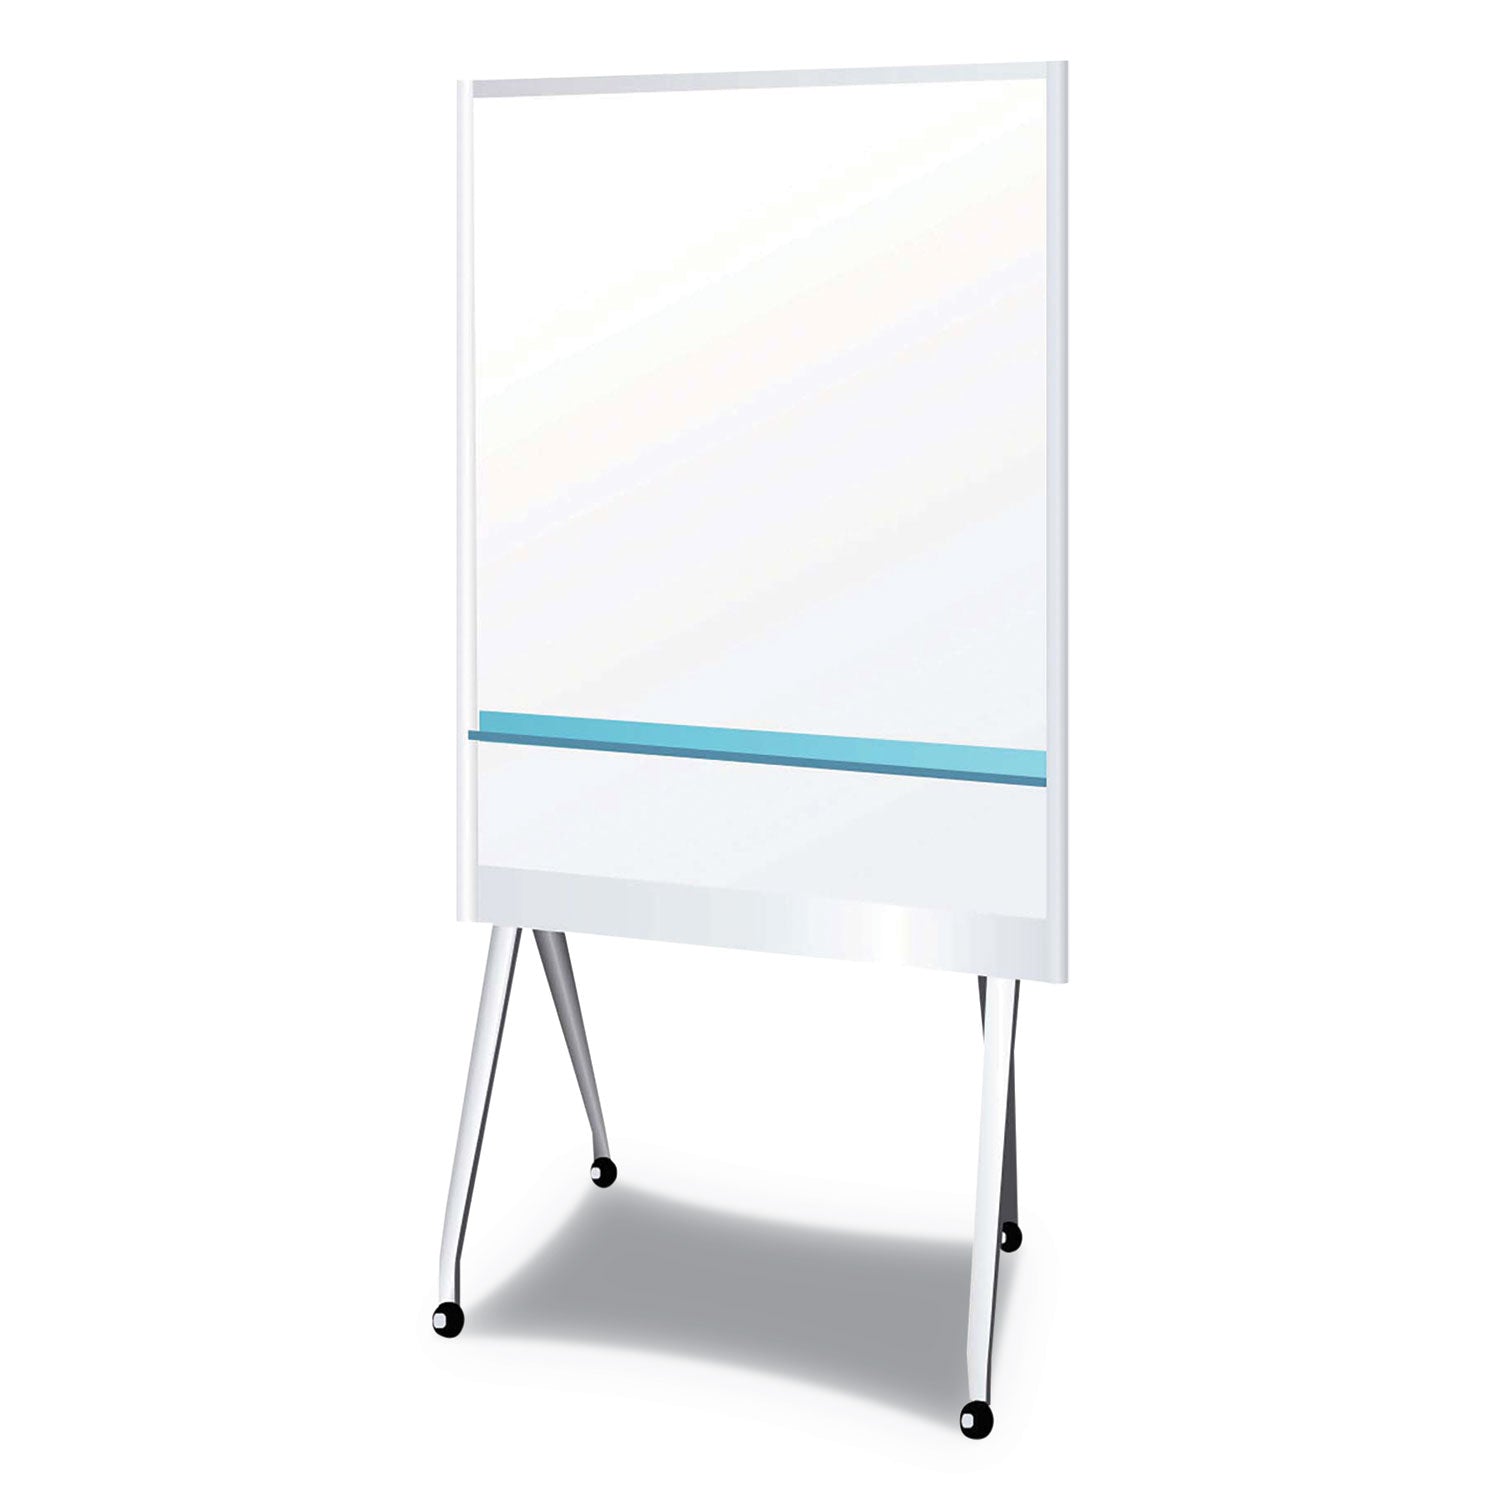 mobile-partition-board-383-x-708-white-surface-light-gray-aluminum-frame_pls912mpblg - 1